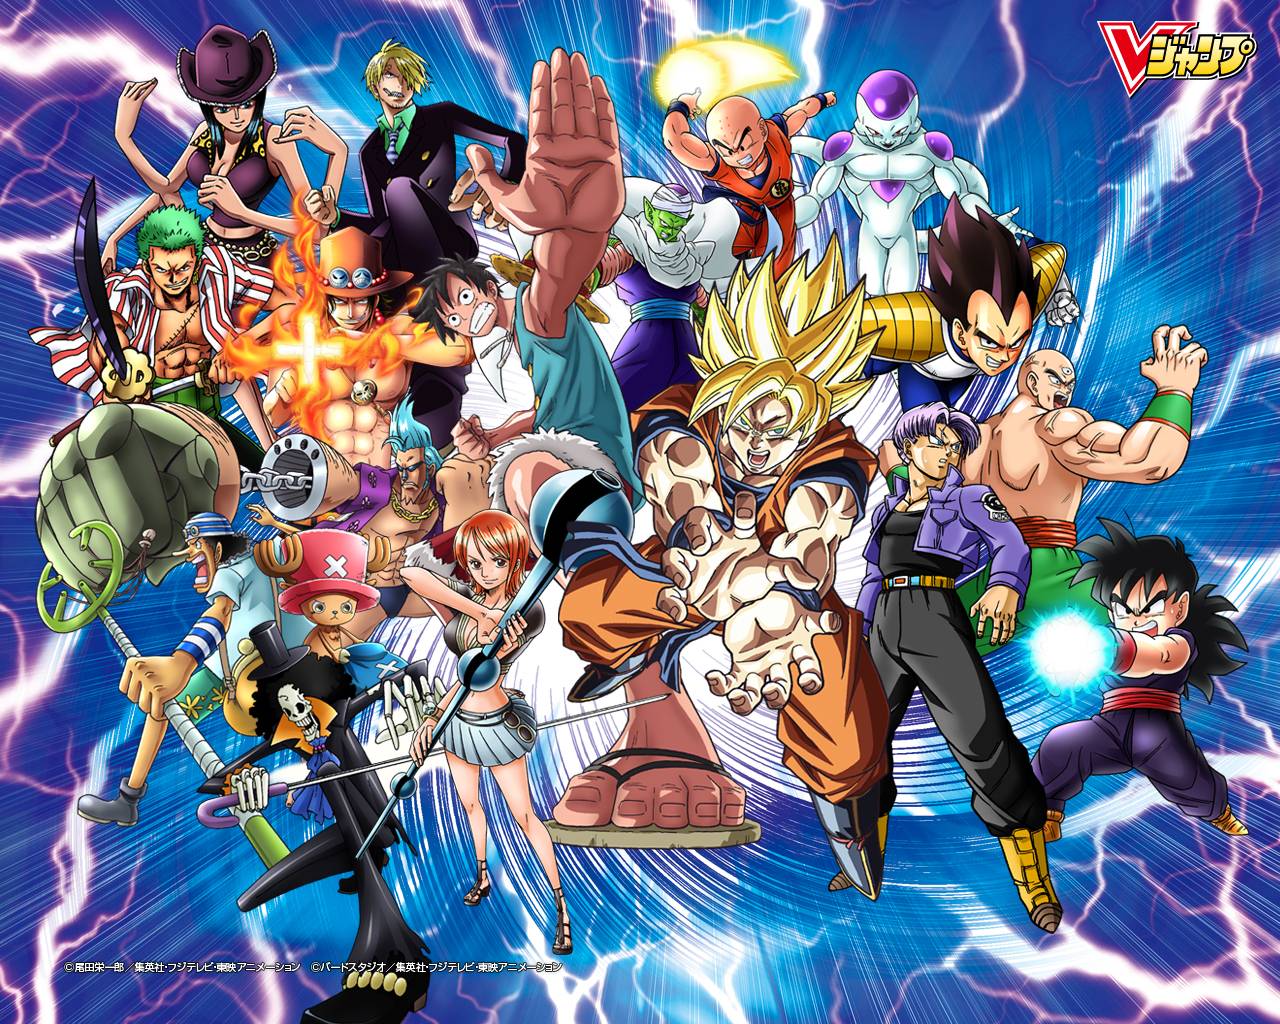 Download 80 Wallpaper One Piece Vs Naruto terbaru 2019